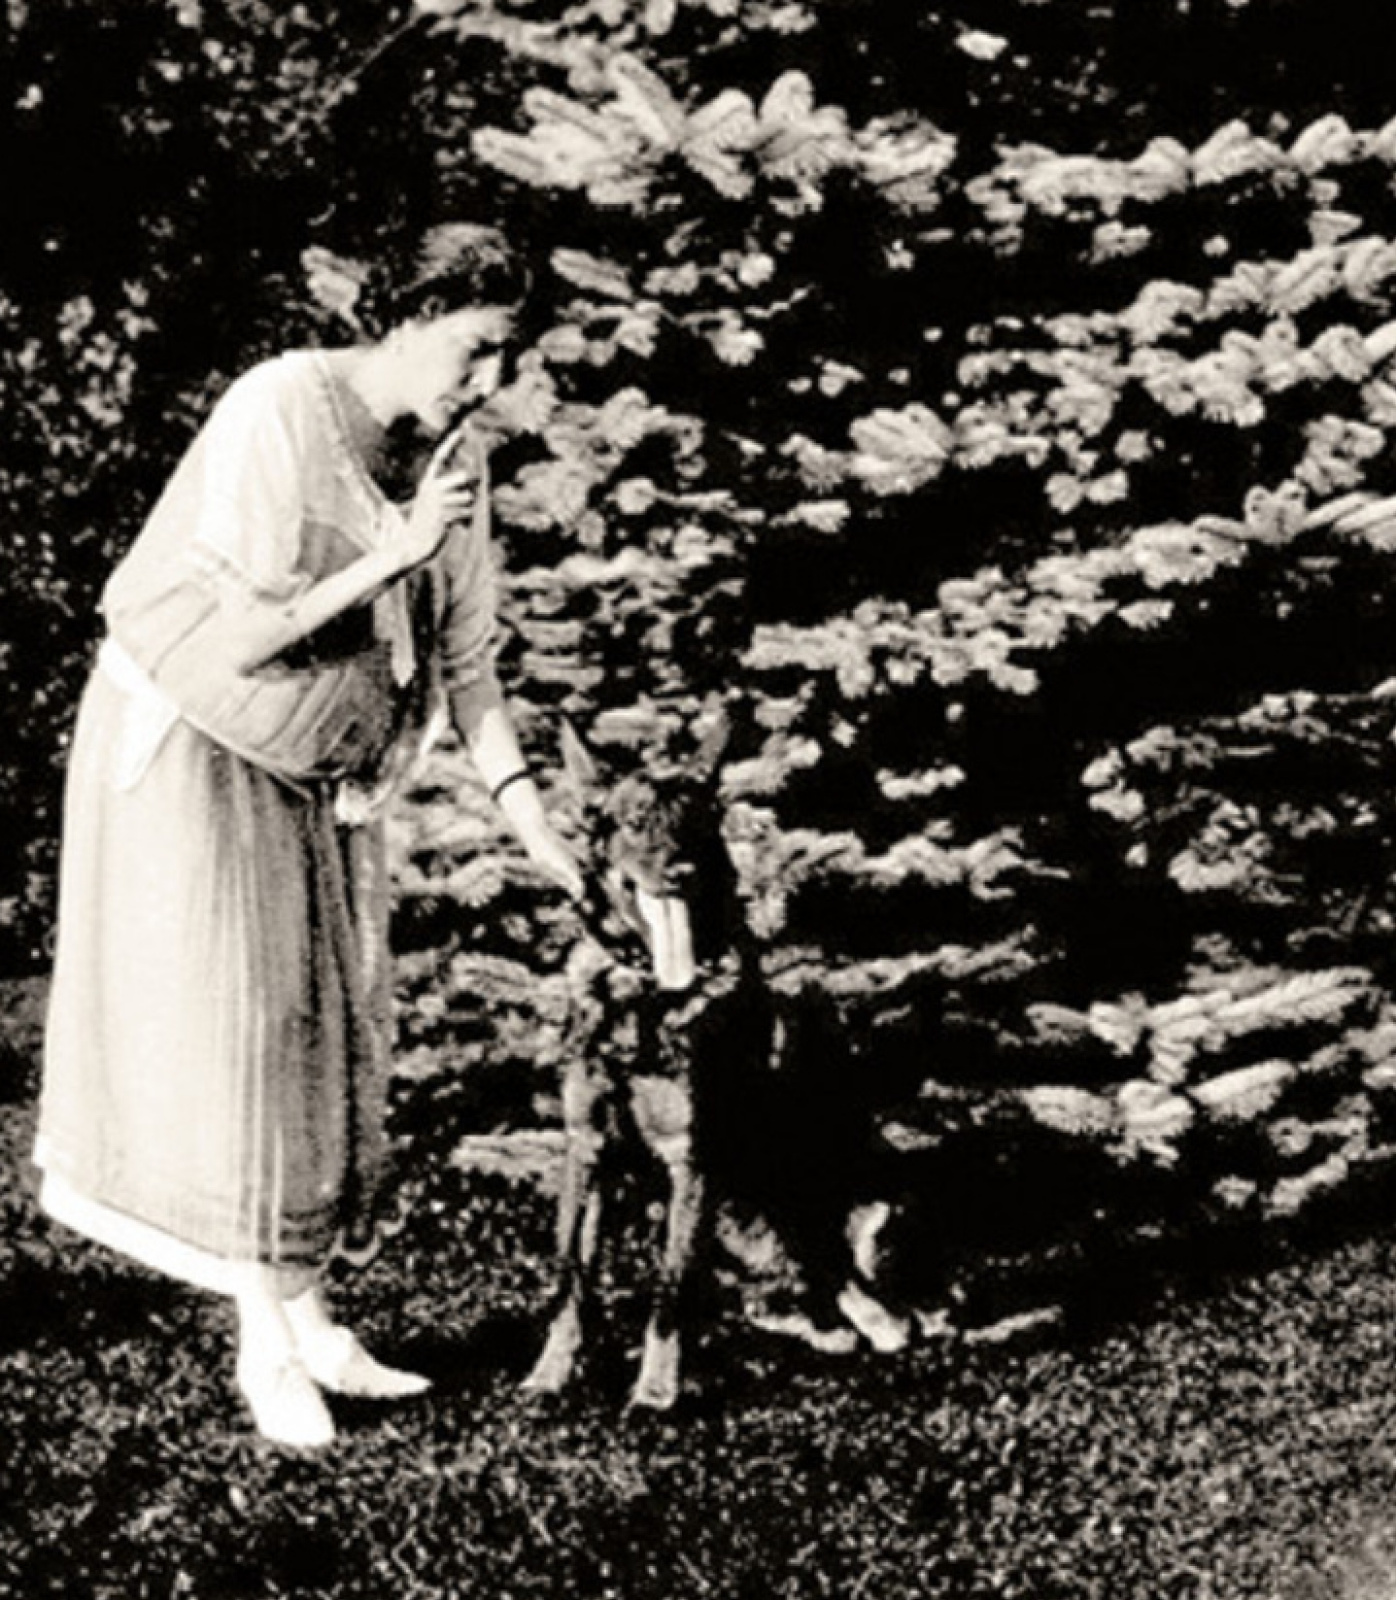 Adele Bloch-Bauer, 1920
Photo source: wikimedia